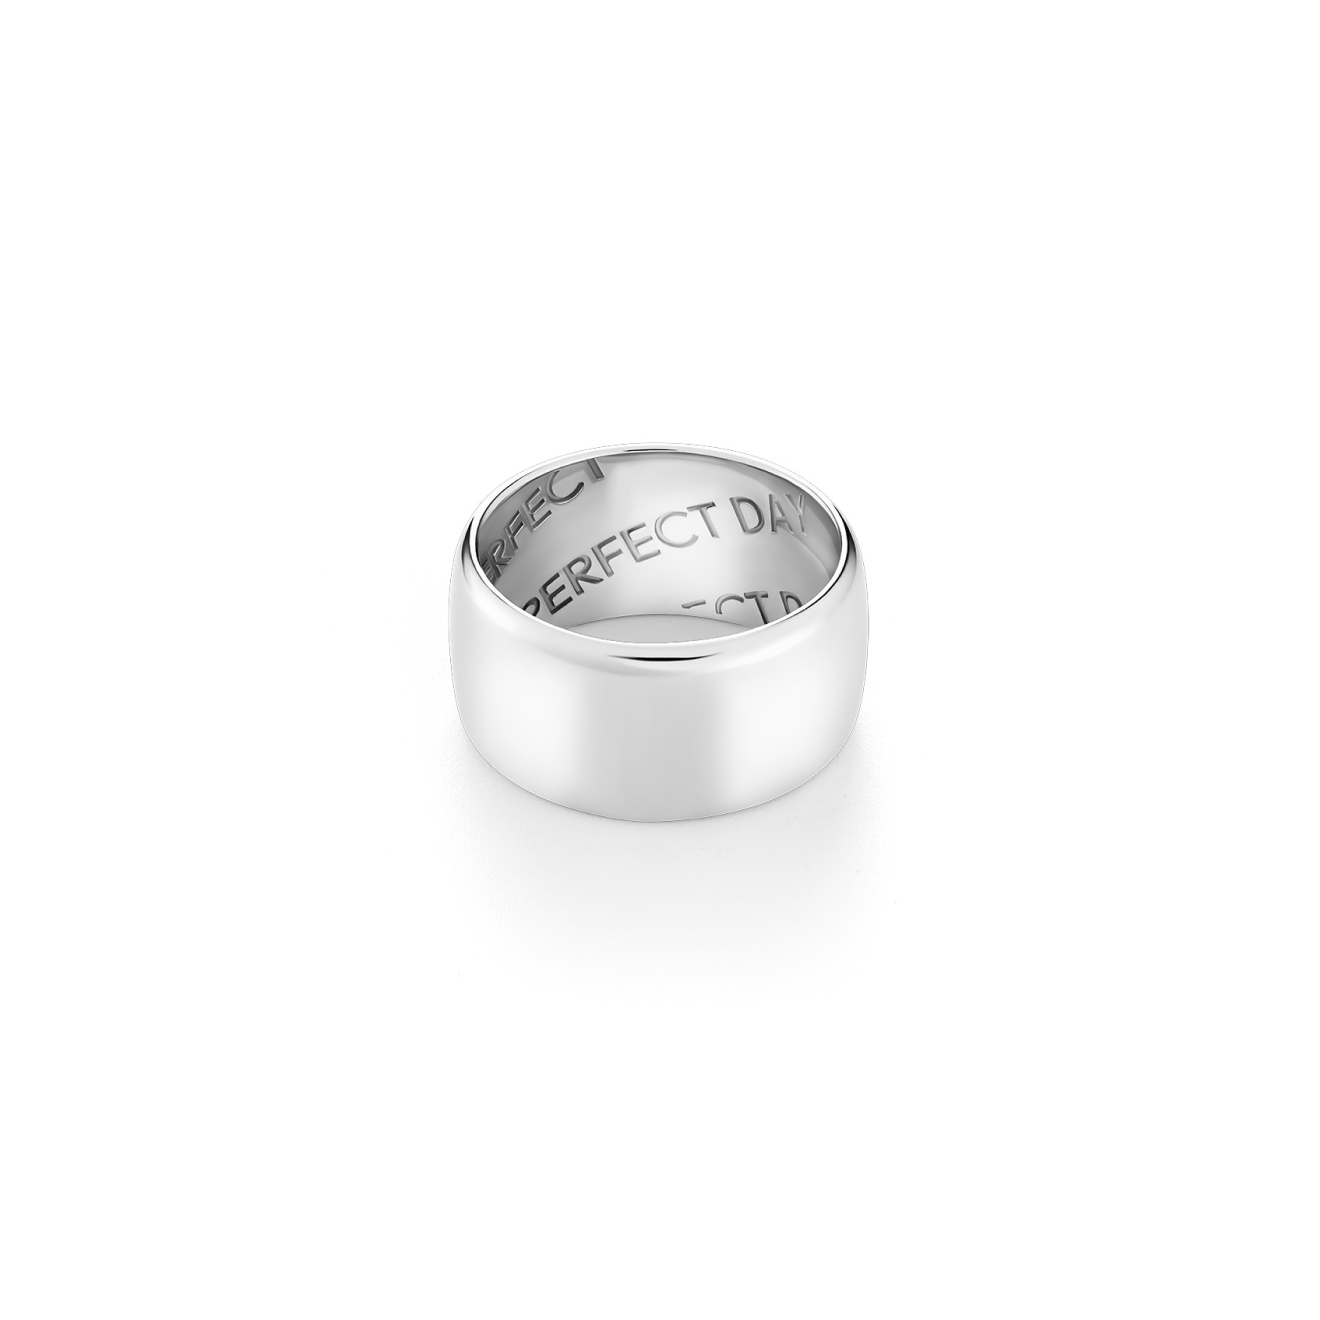 Avgvst Широкое кольцо из серебра PERFECT DAY avgvst кольцо ожерелье из серебра